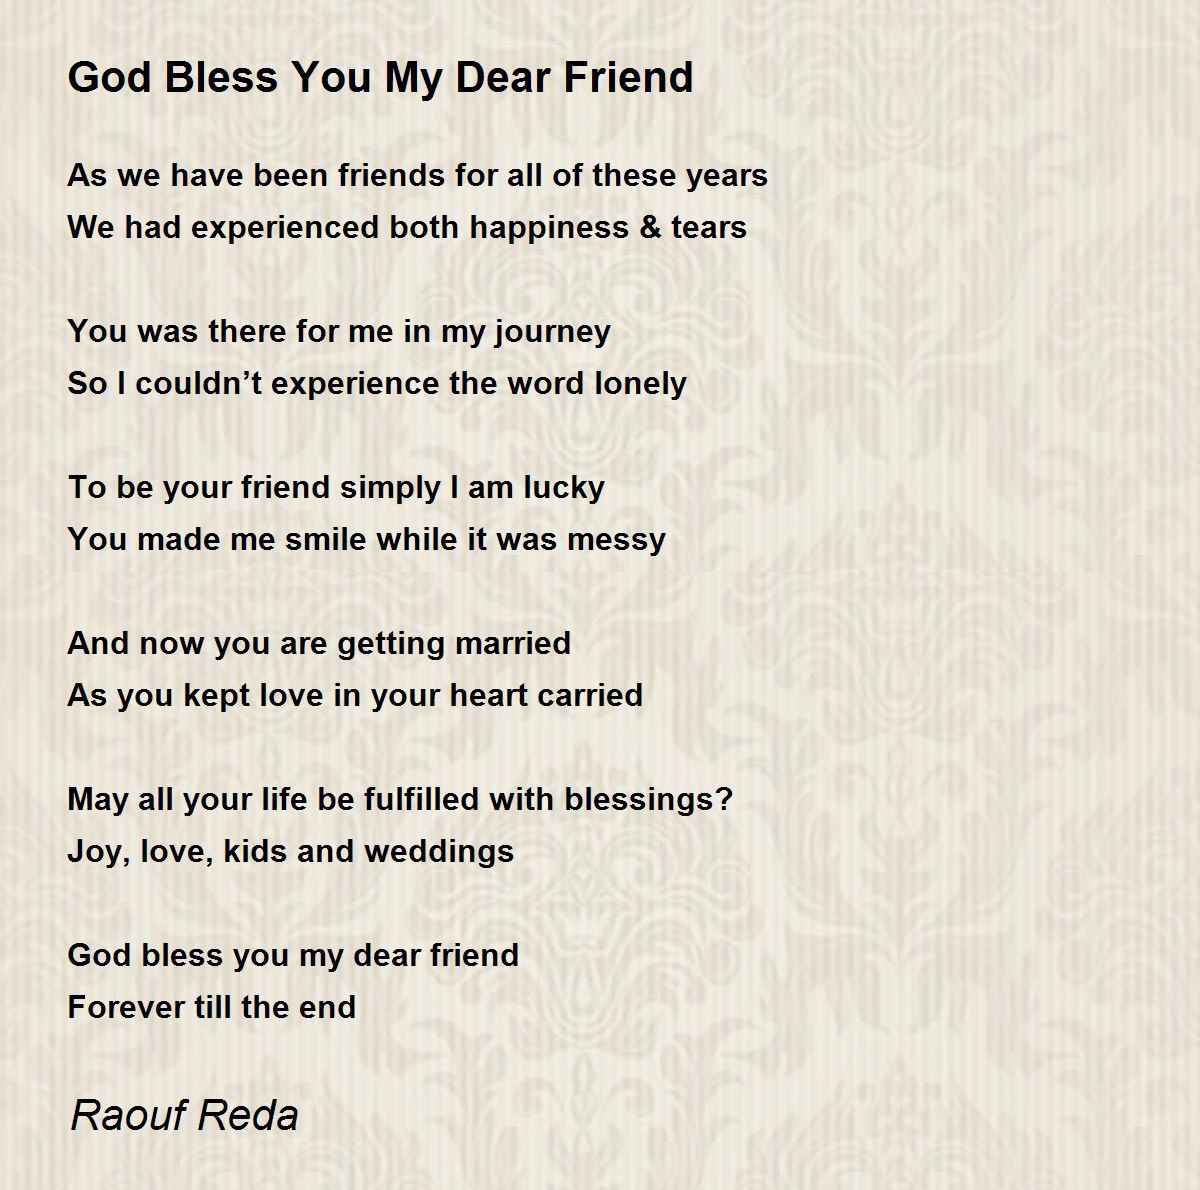 God Bless You My Dear Friend - God Bless You My Dear Friend Poem ...